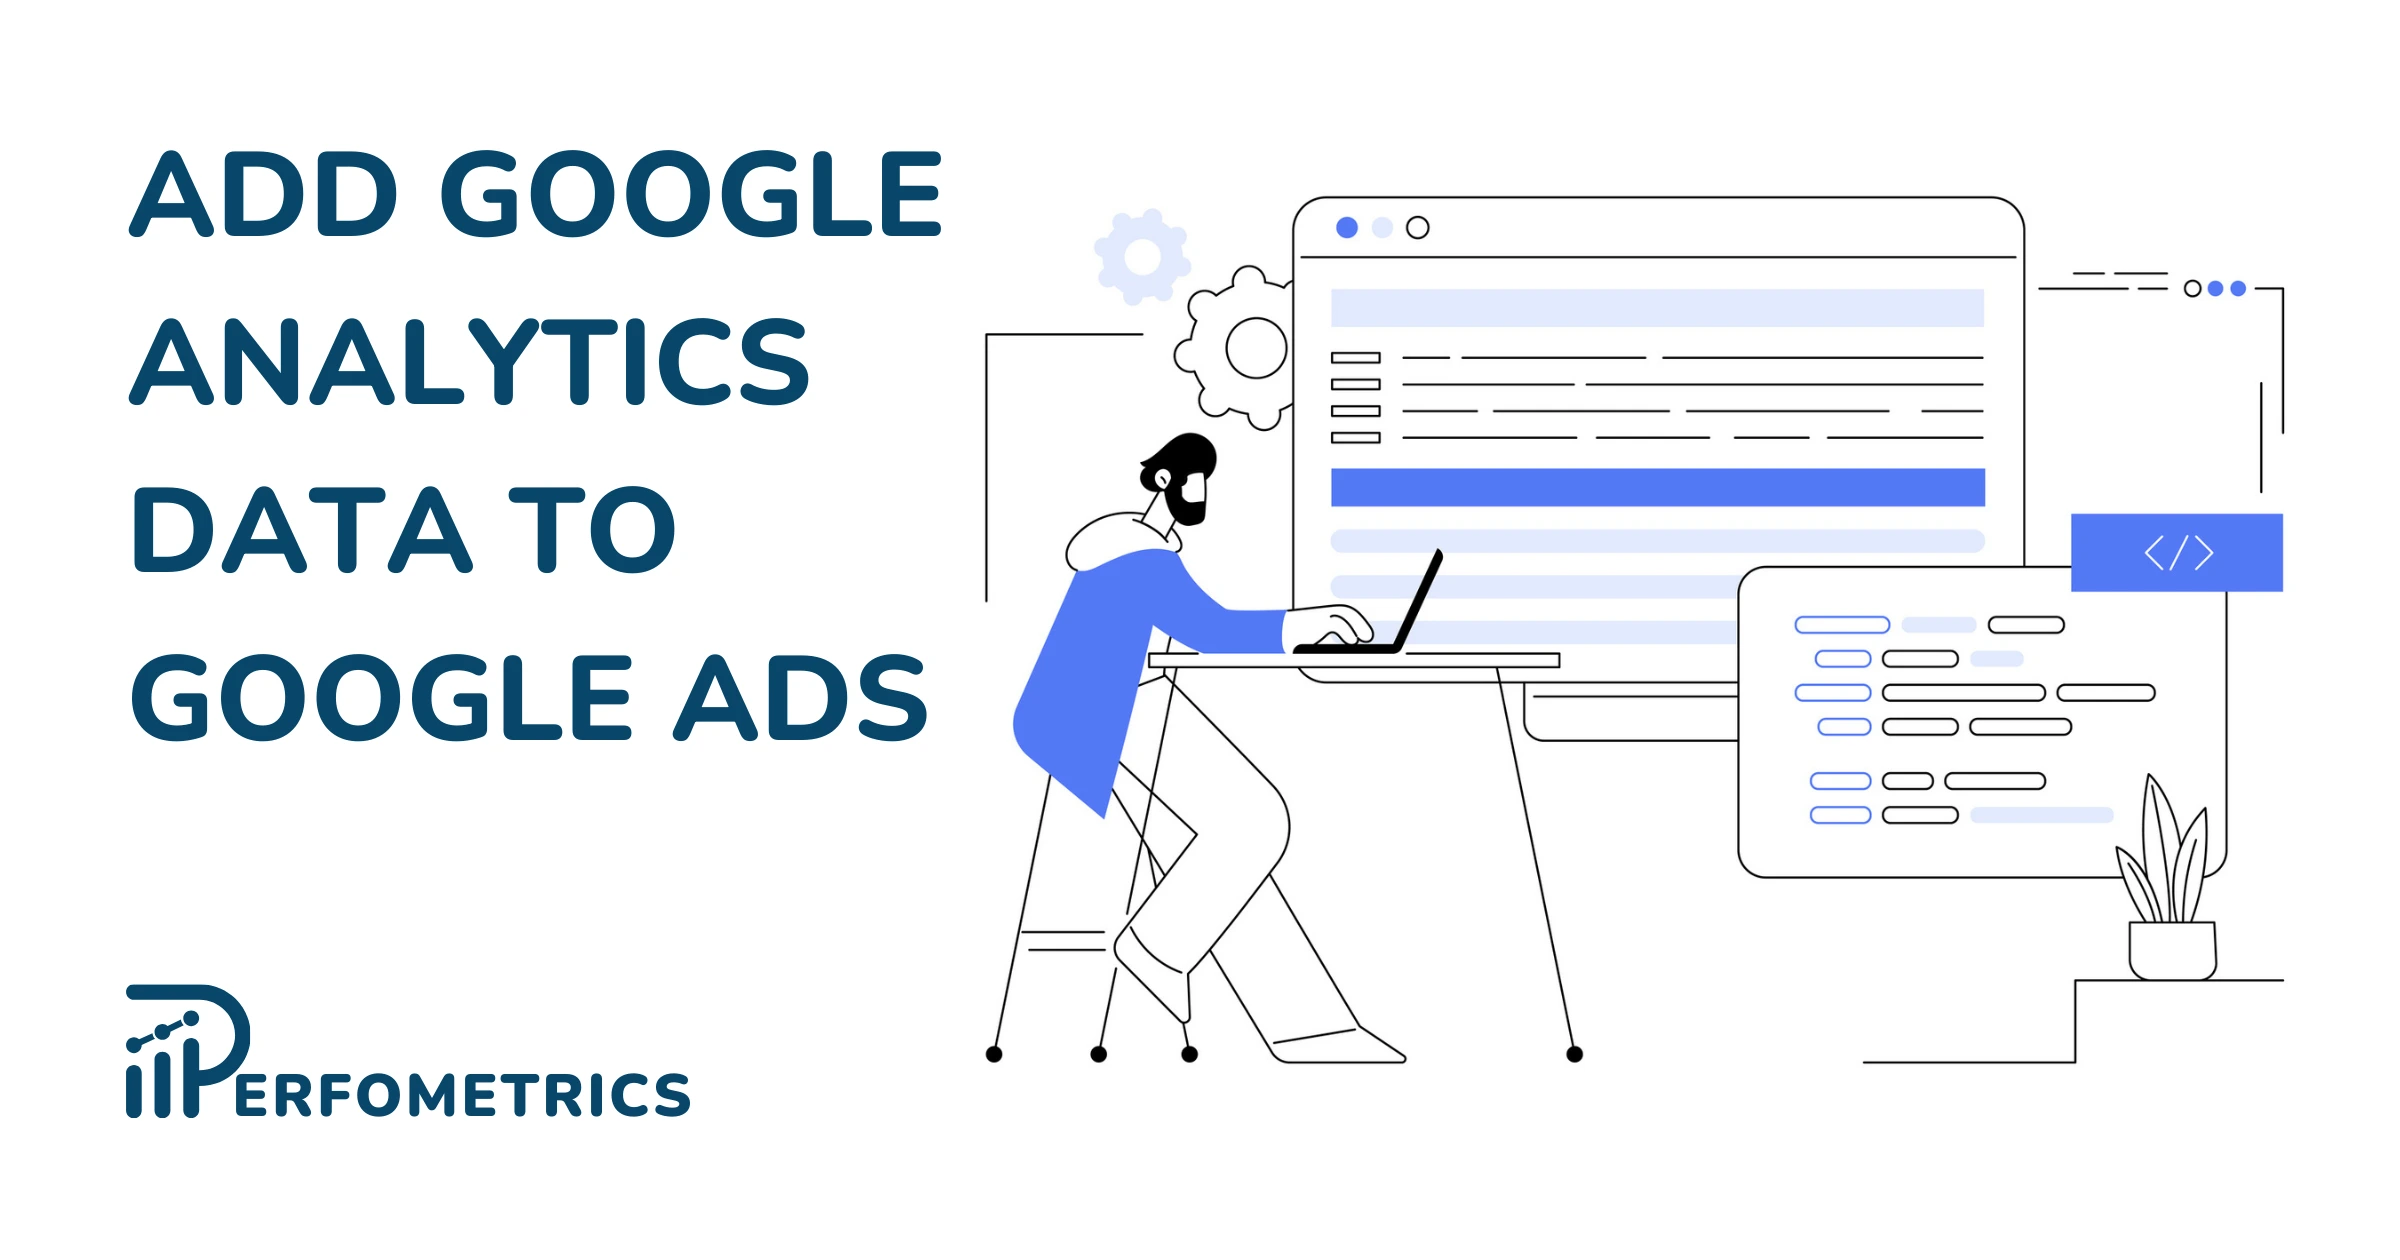 How to Add Google Analytics Data to Google Ads